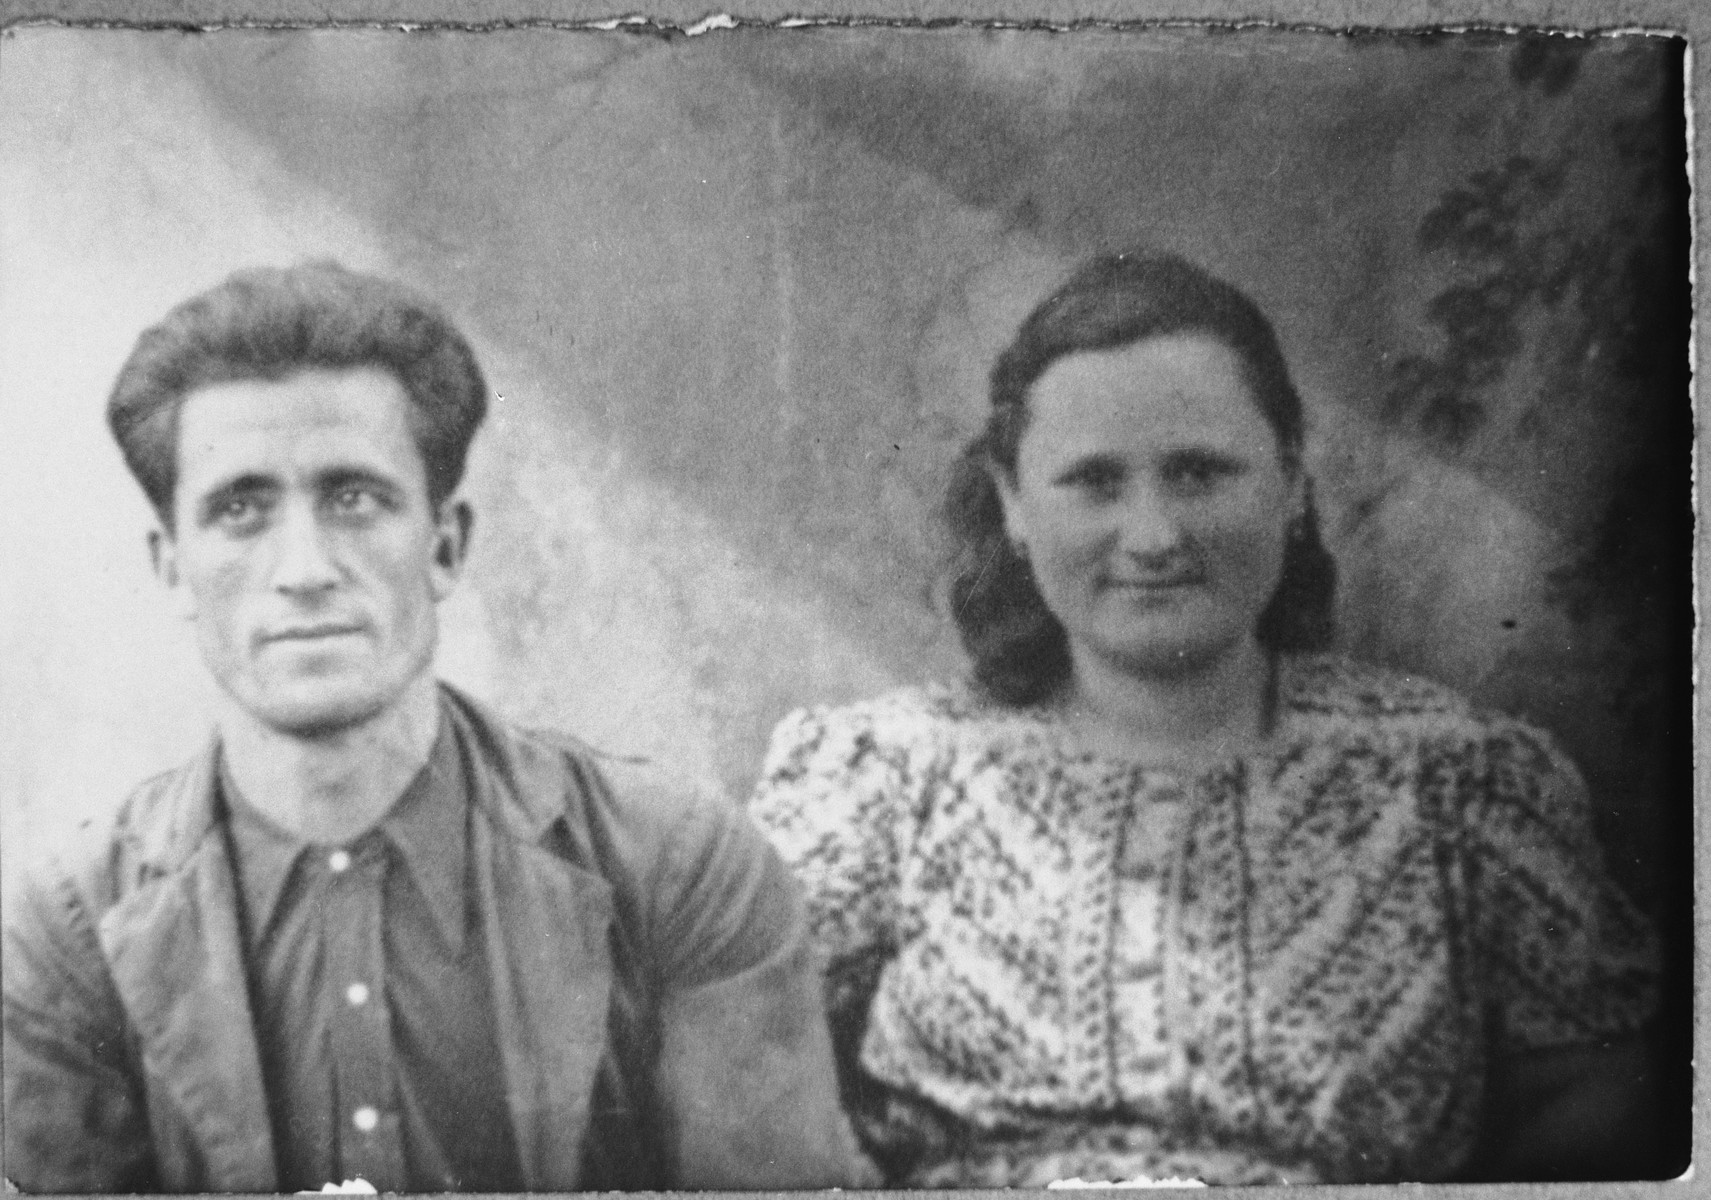 Portrait of Todoros Levi, son of Haim Levi, and Todoros' wife, Sara.  Todoros was a gardner.  They lived at Mitrovatska 7 in Bitola.